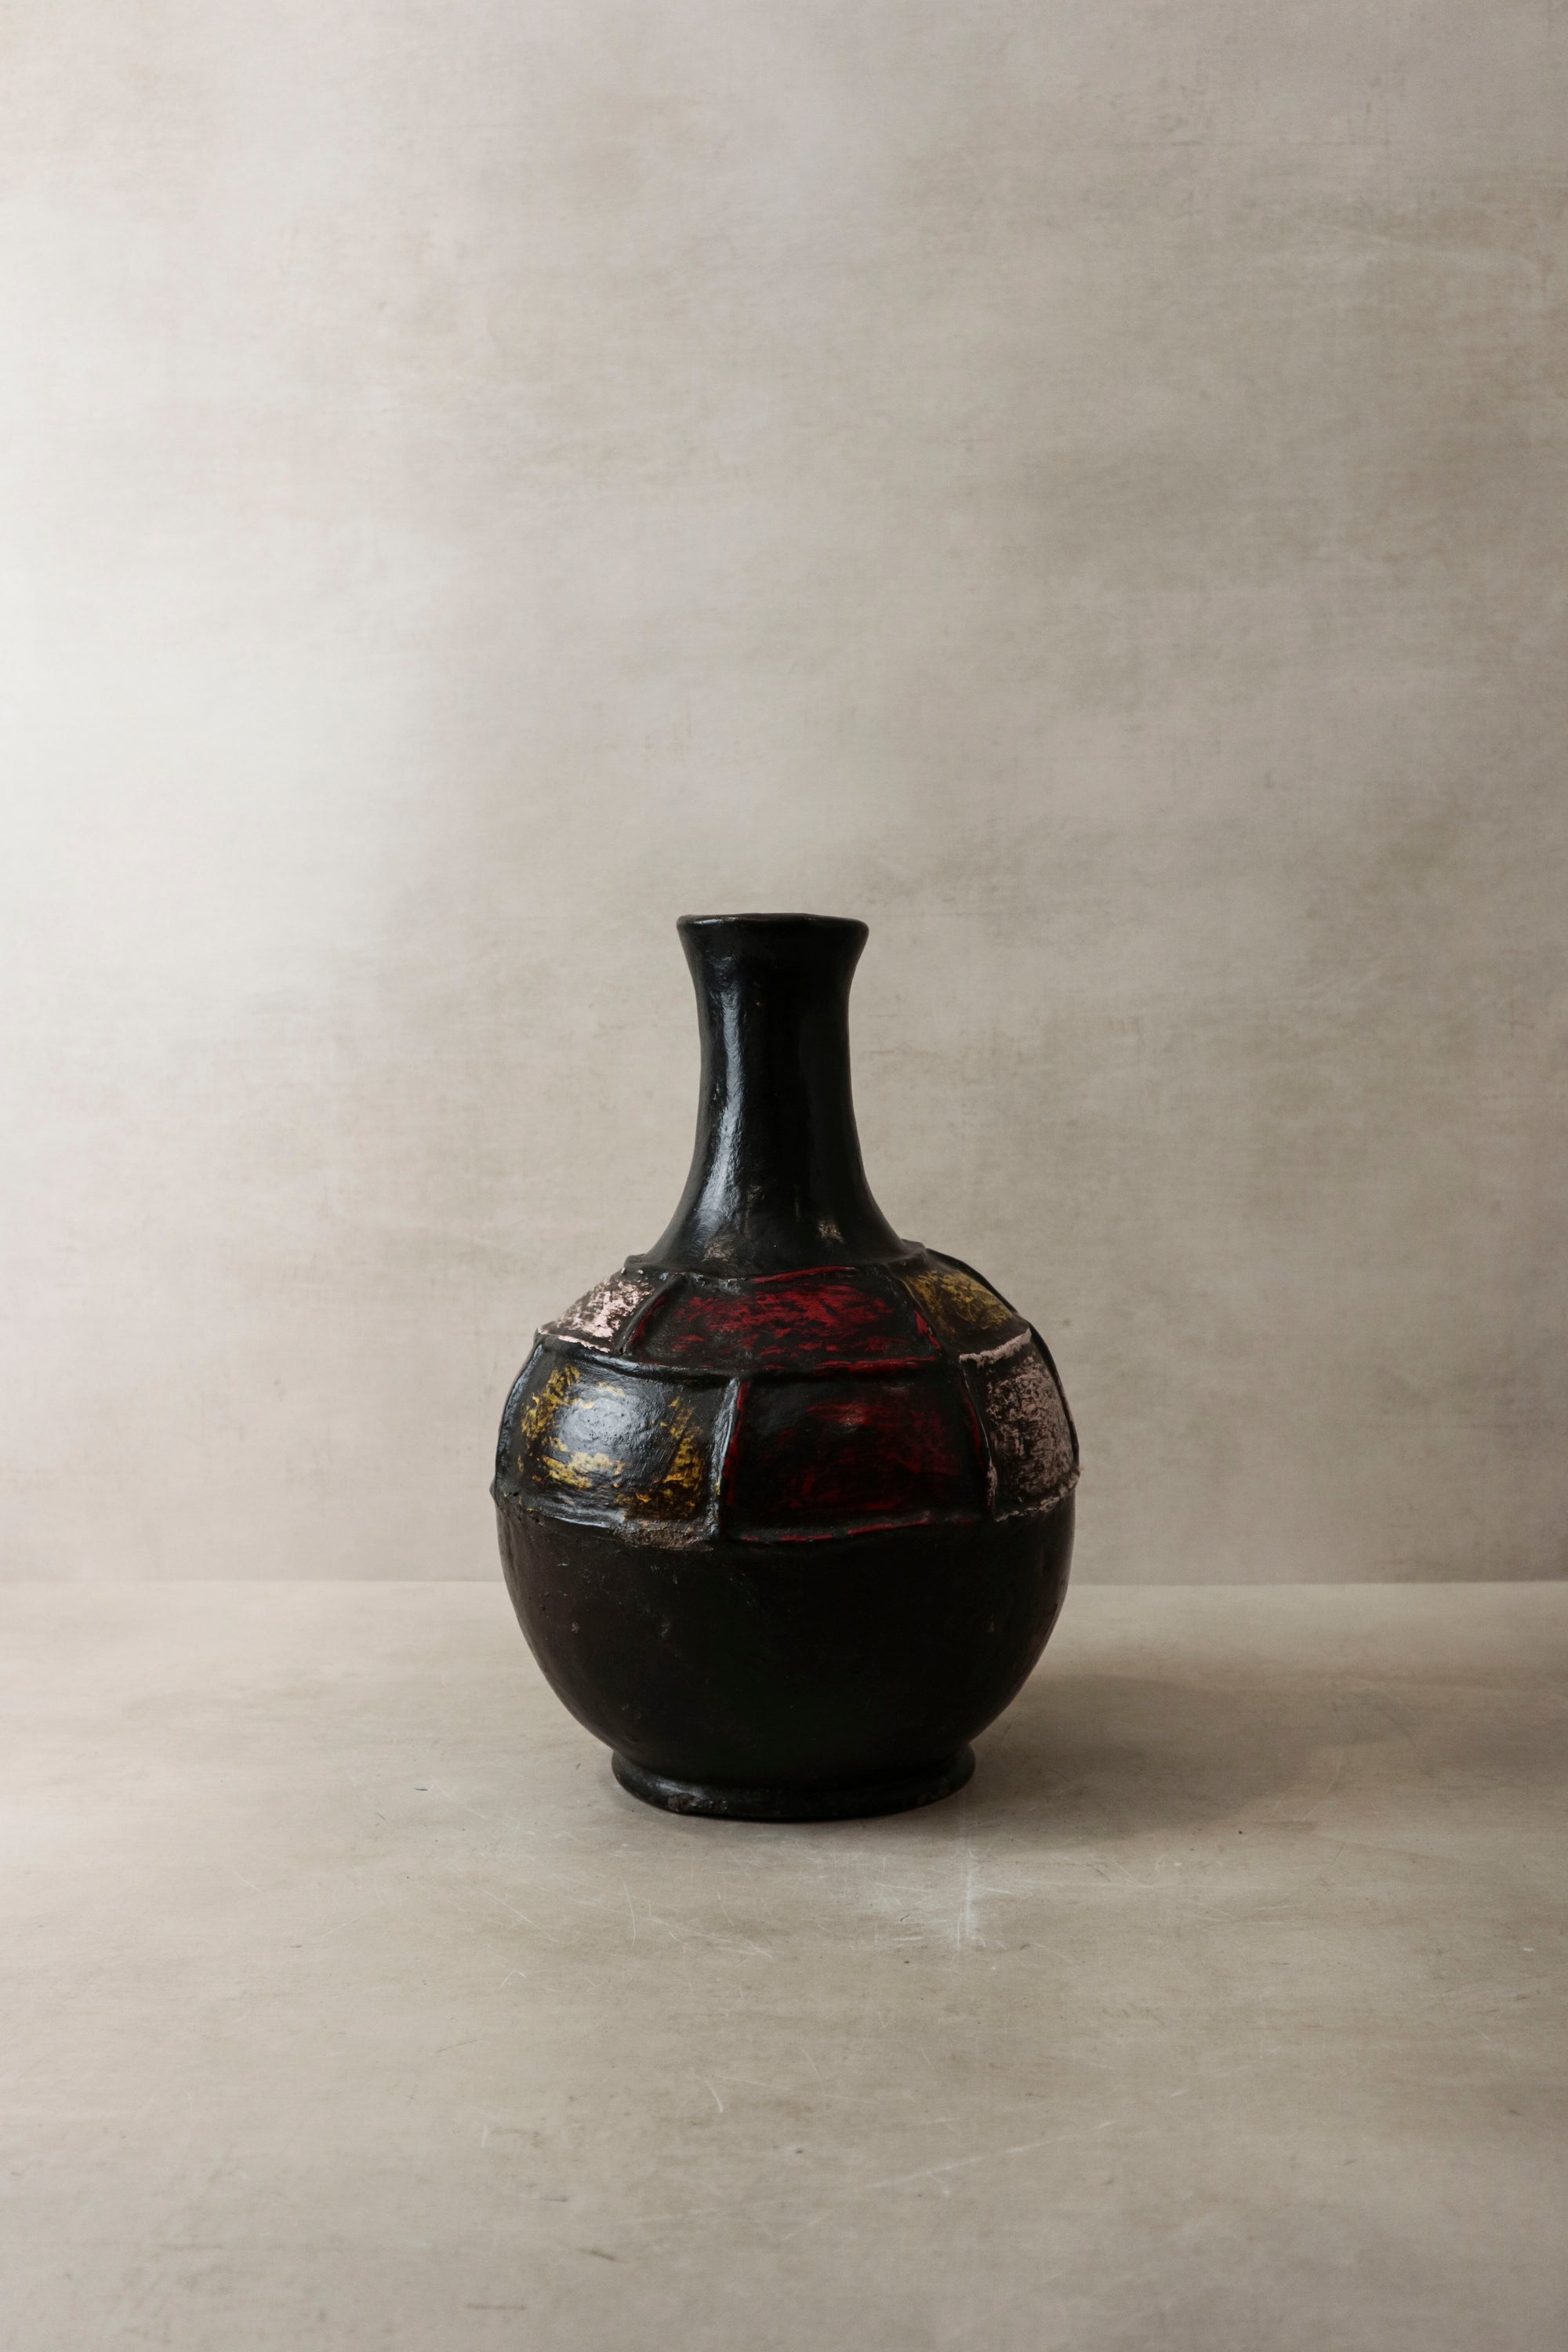 Mangbetu Clay Vase, Tanzania - 41.3